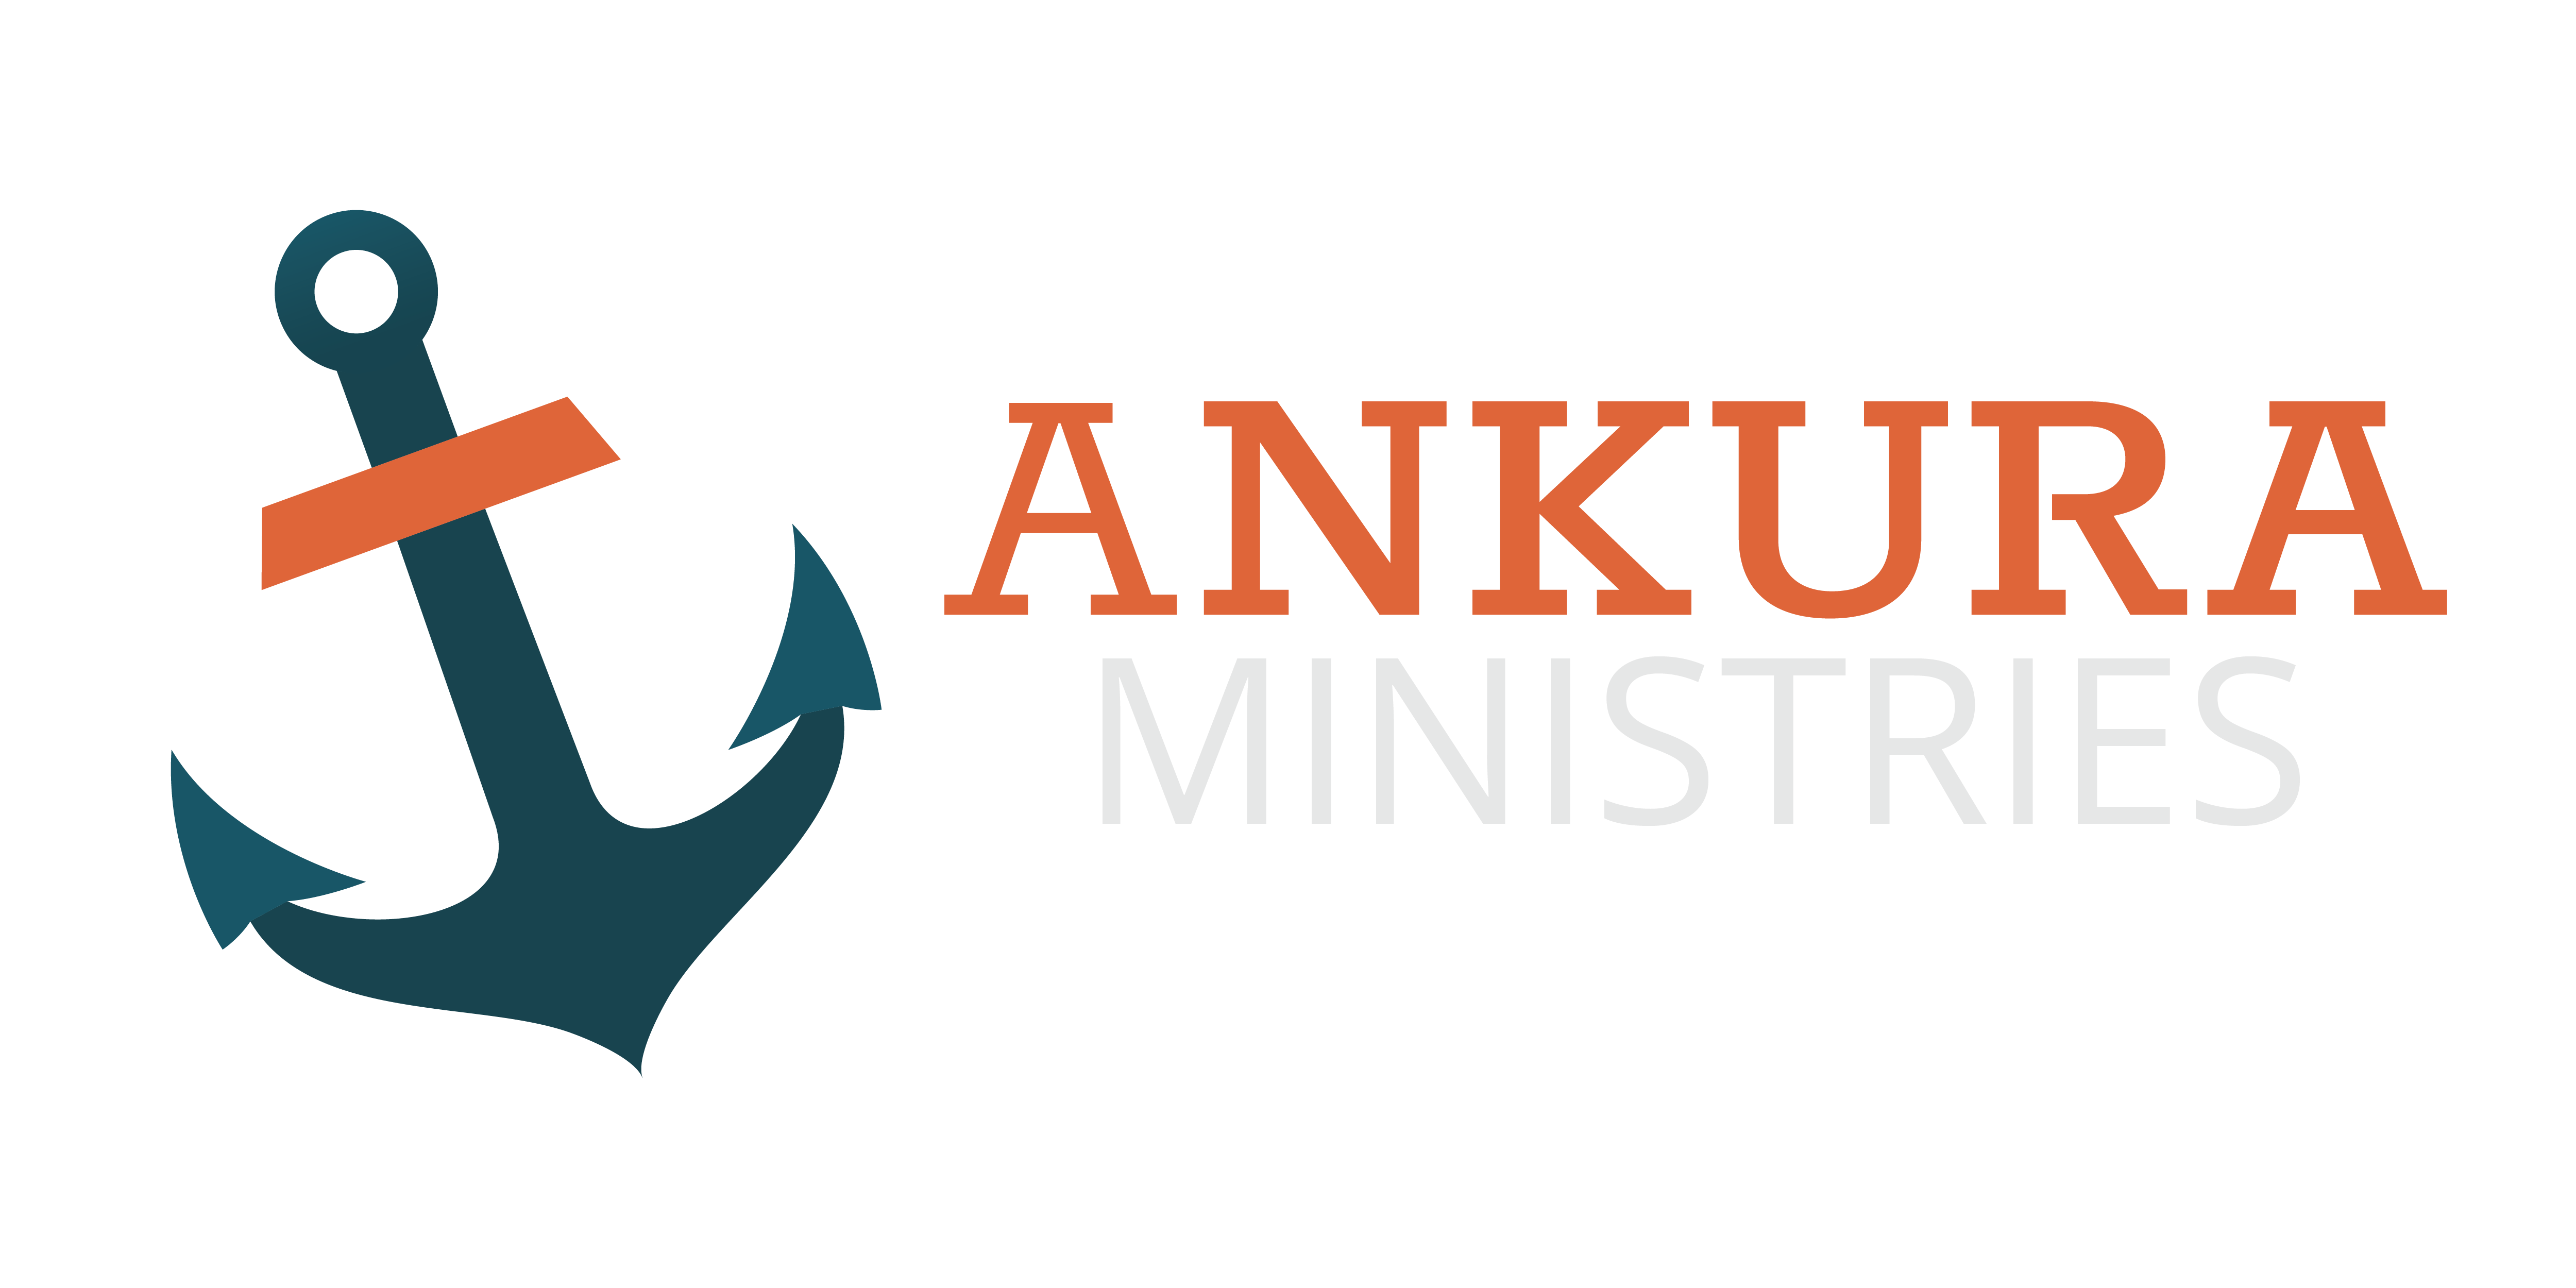 Volunteer ankura ministries. Volunteering clipart ministry